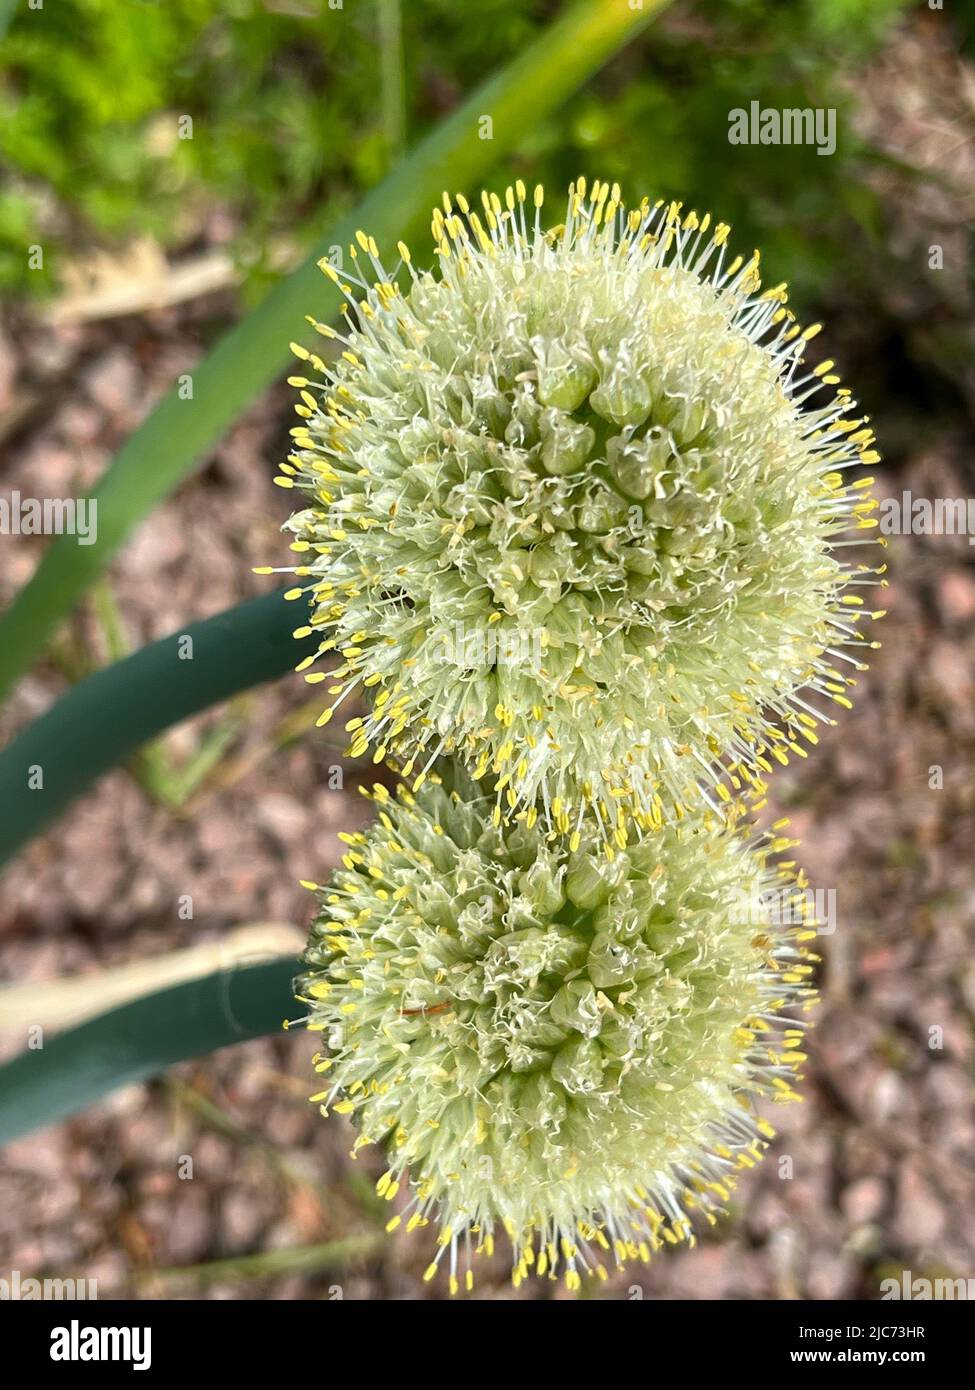 Welsh onion - Allium fistulosum - Frühlingszwiebel - ciboule Stock Photo